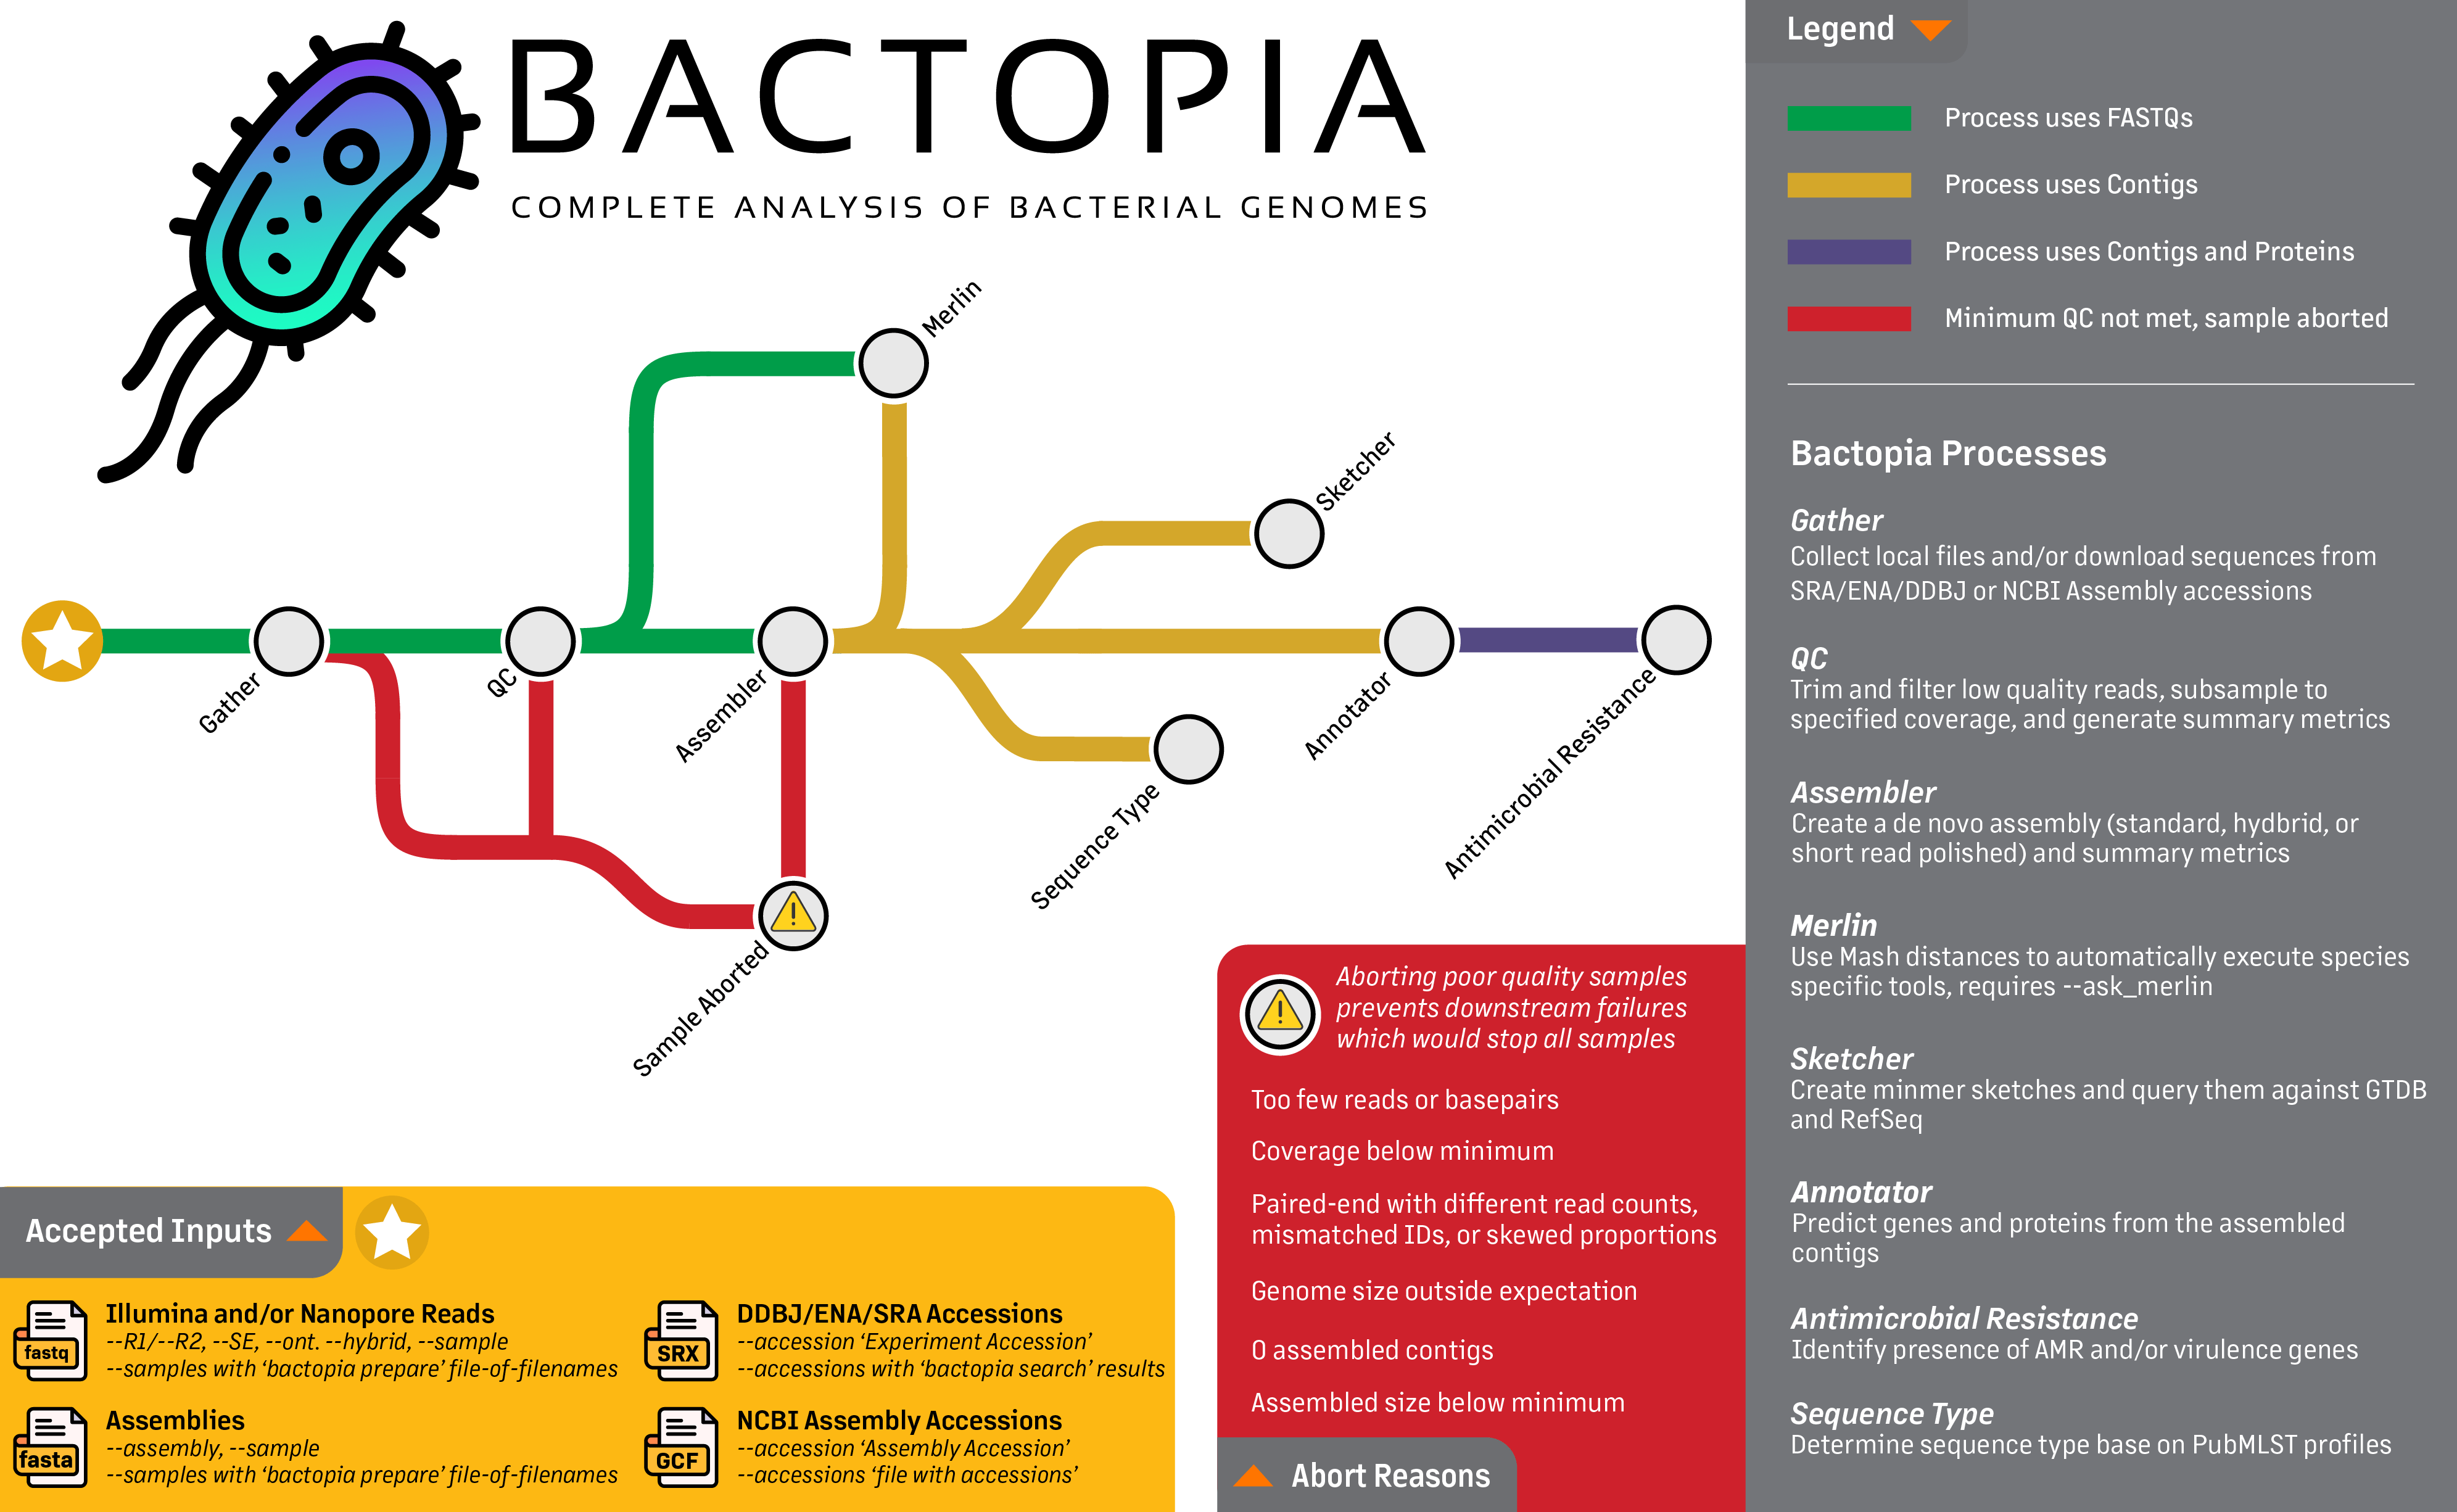 Bactopia Overview